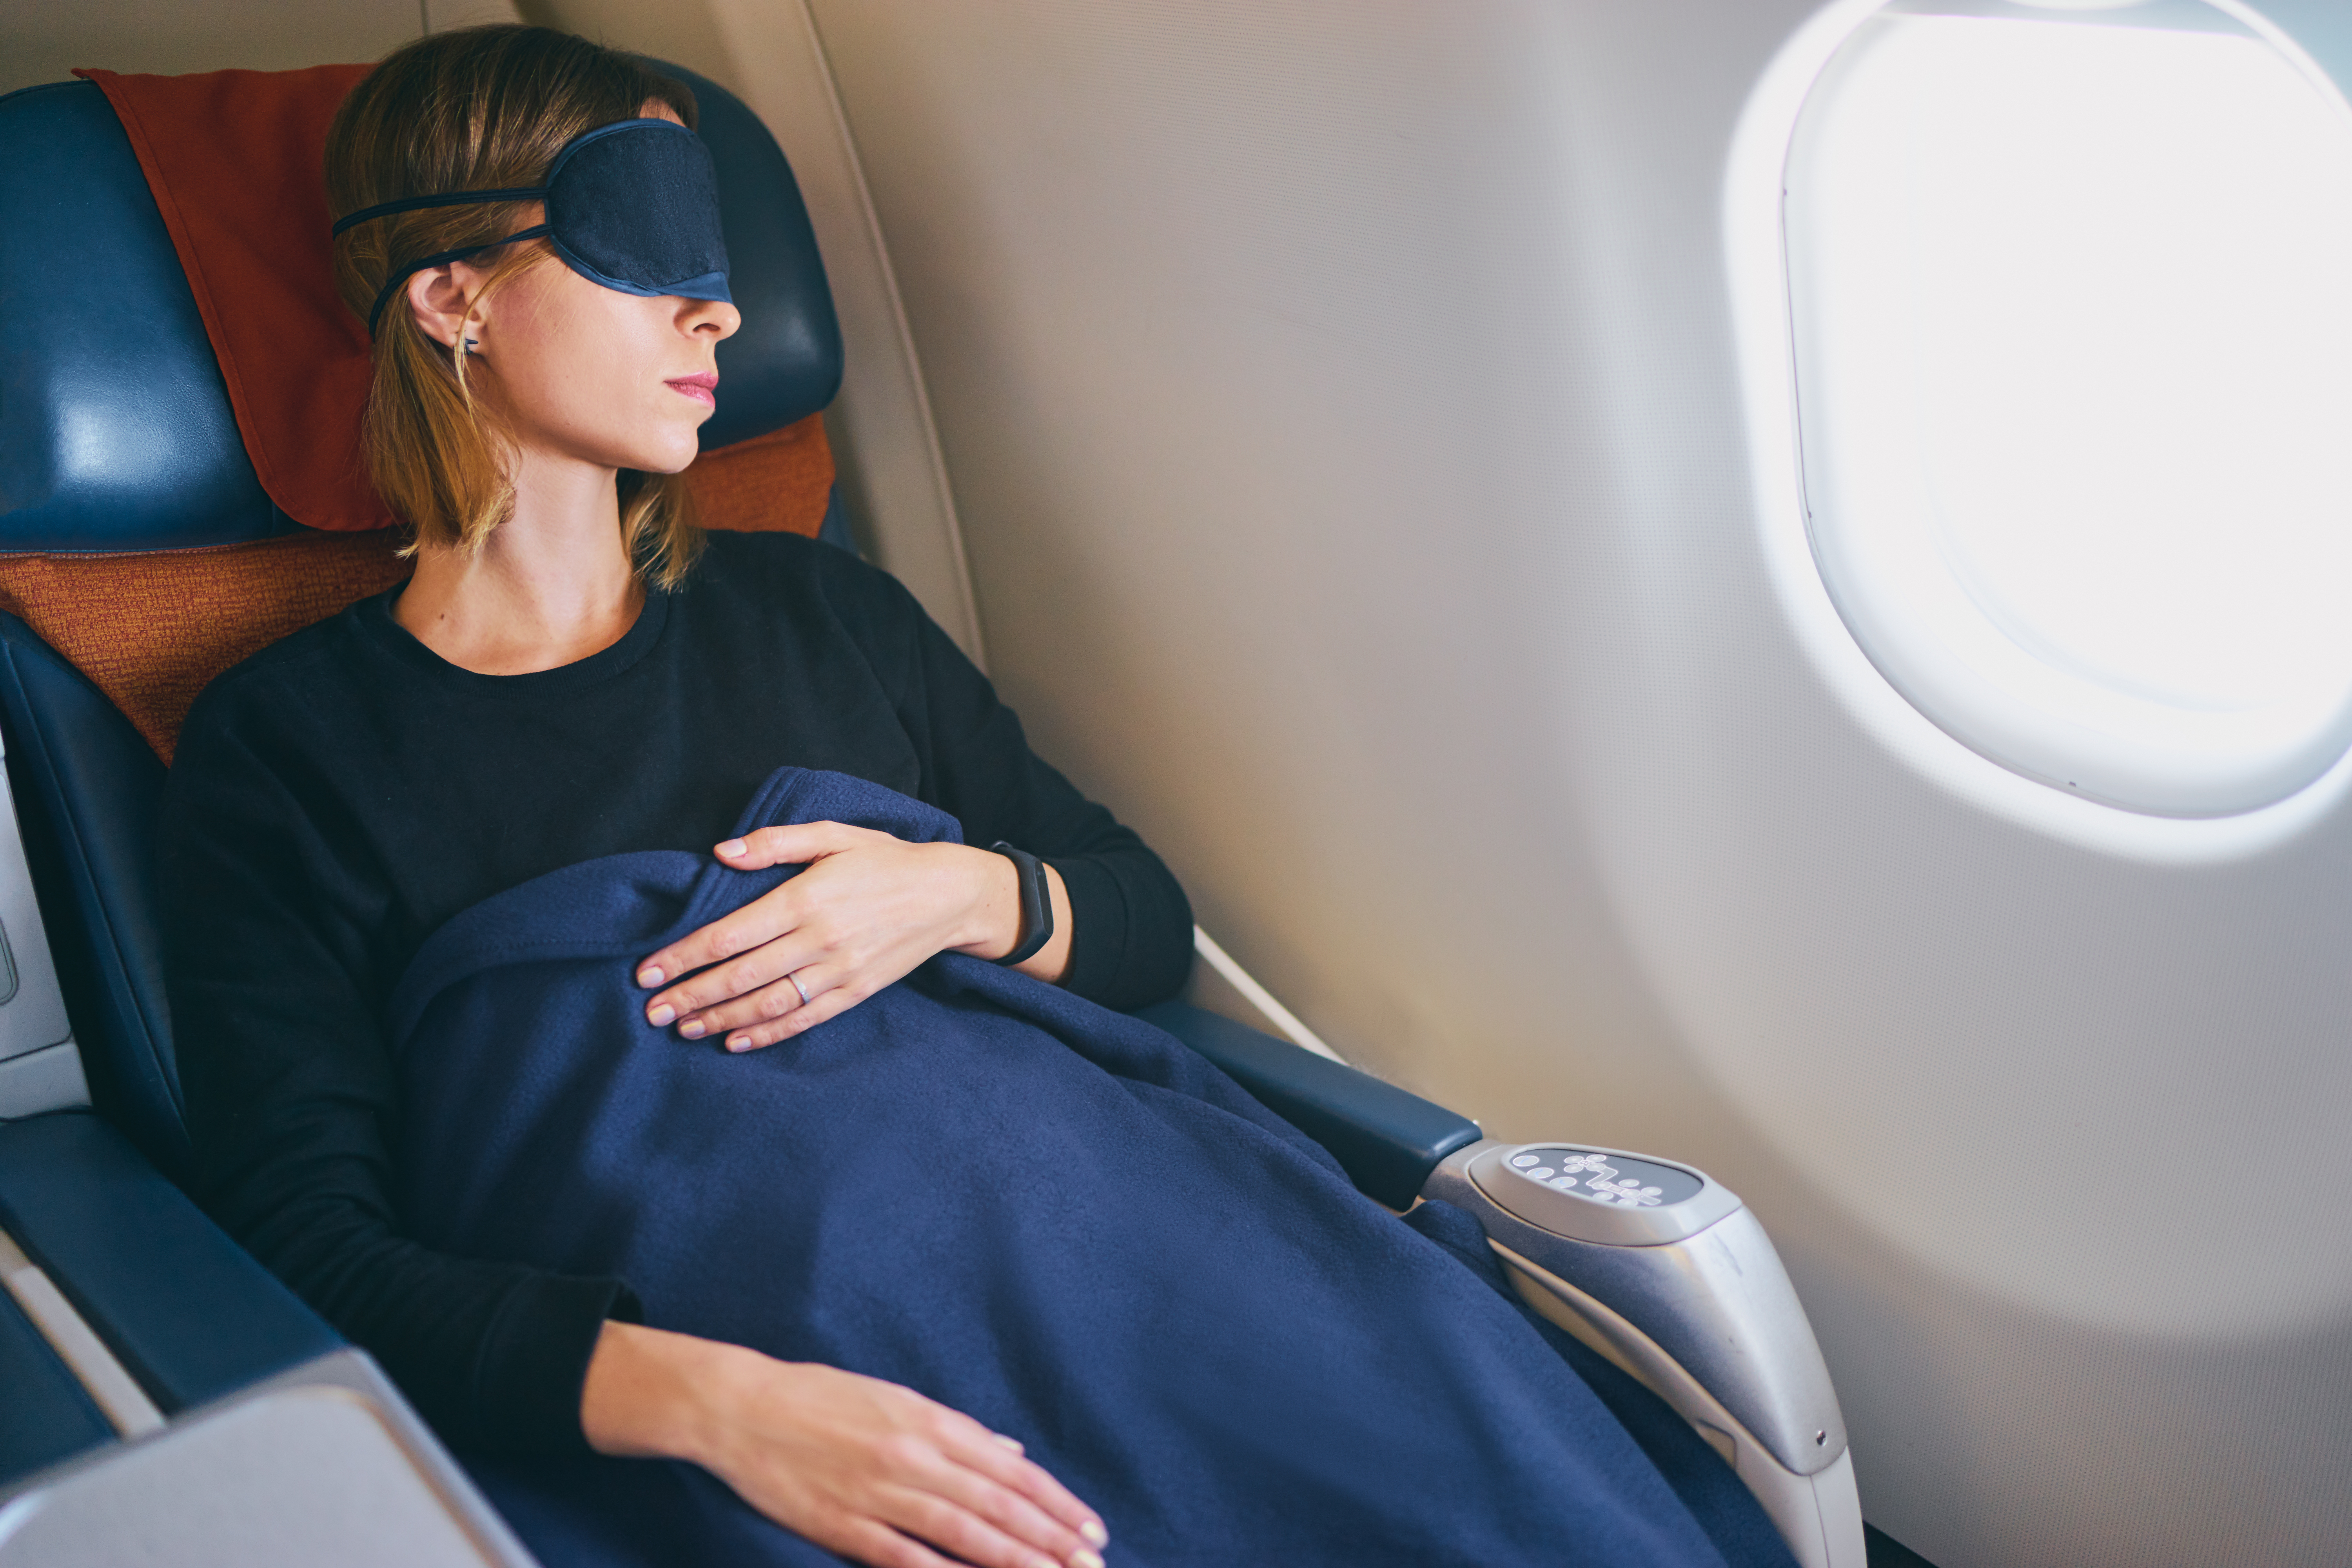 A sleeping female passenger on a plane | Source: Shutterstock